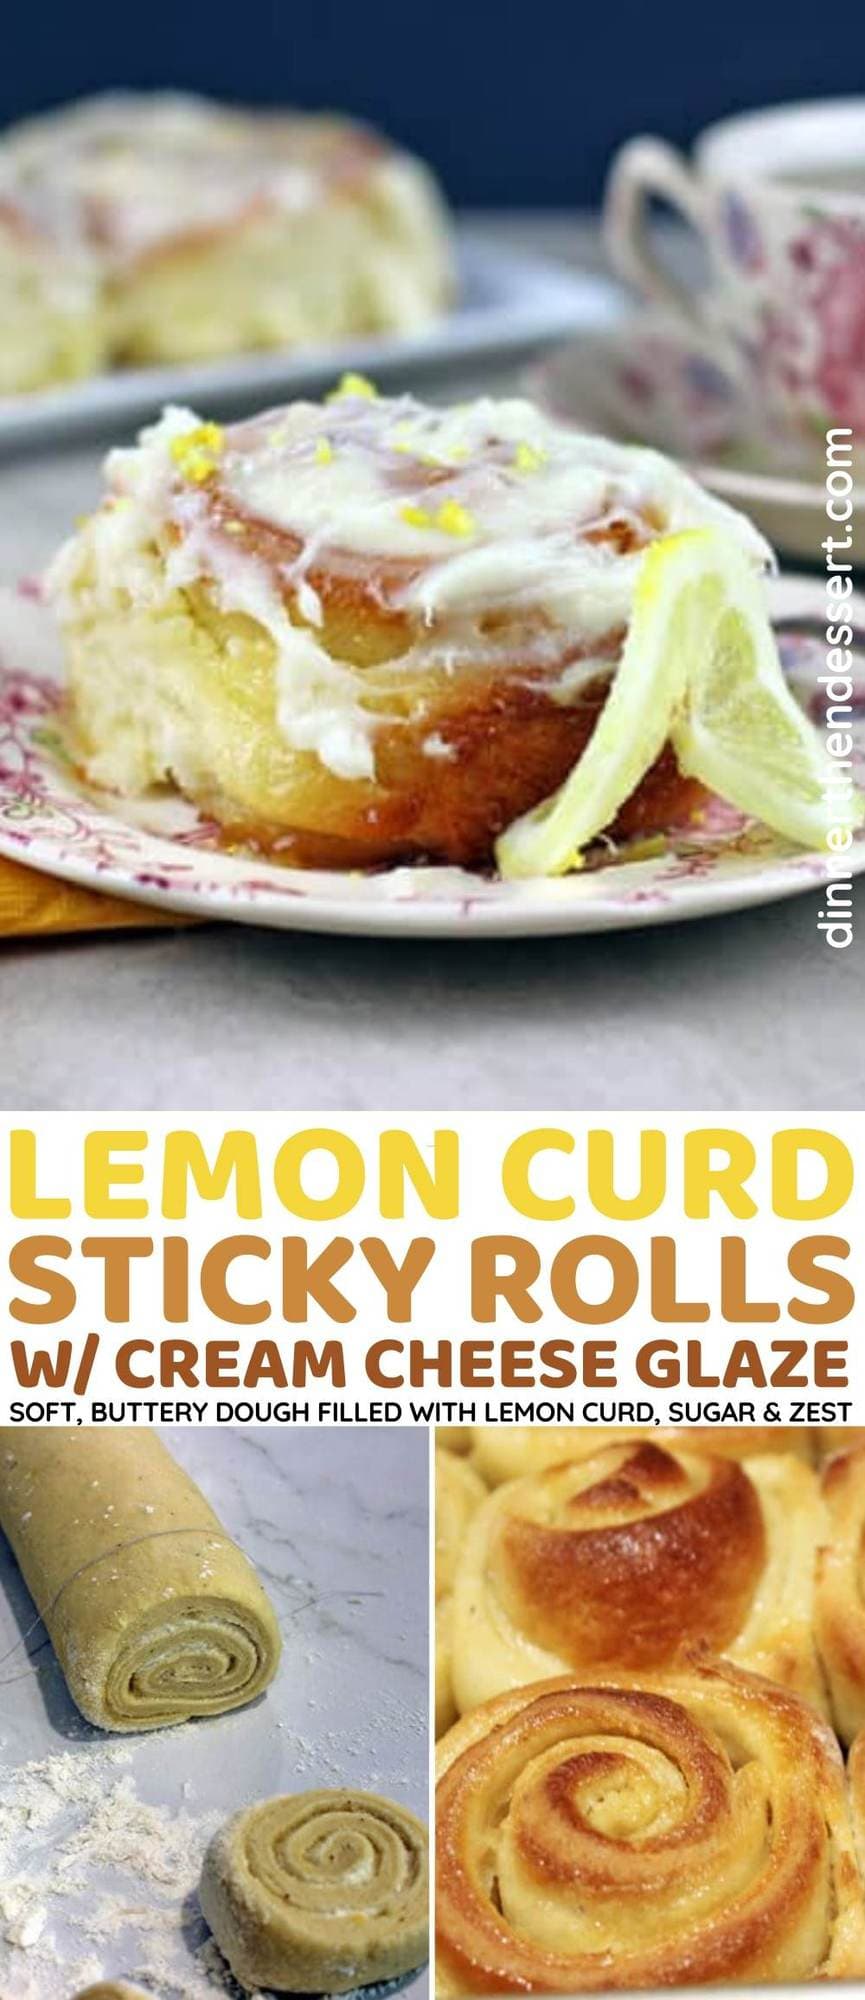 https://dinnerthendessert.com/wp-content/uploads/2015/07/Lemon-Curd-Sticky-Rolls-with-Cream-Cheese-Glaze-L.jpg